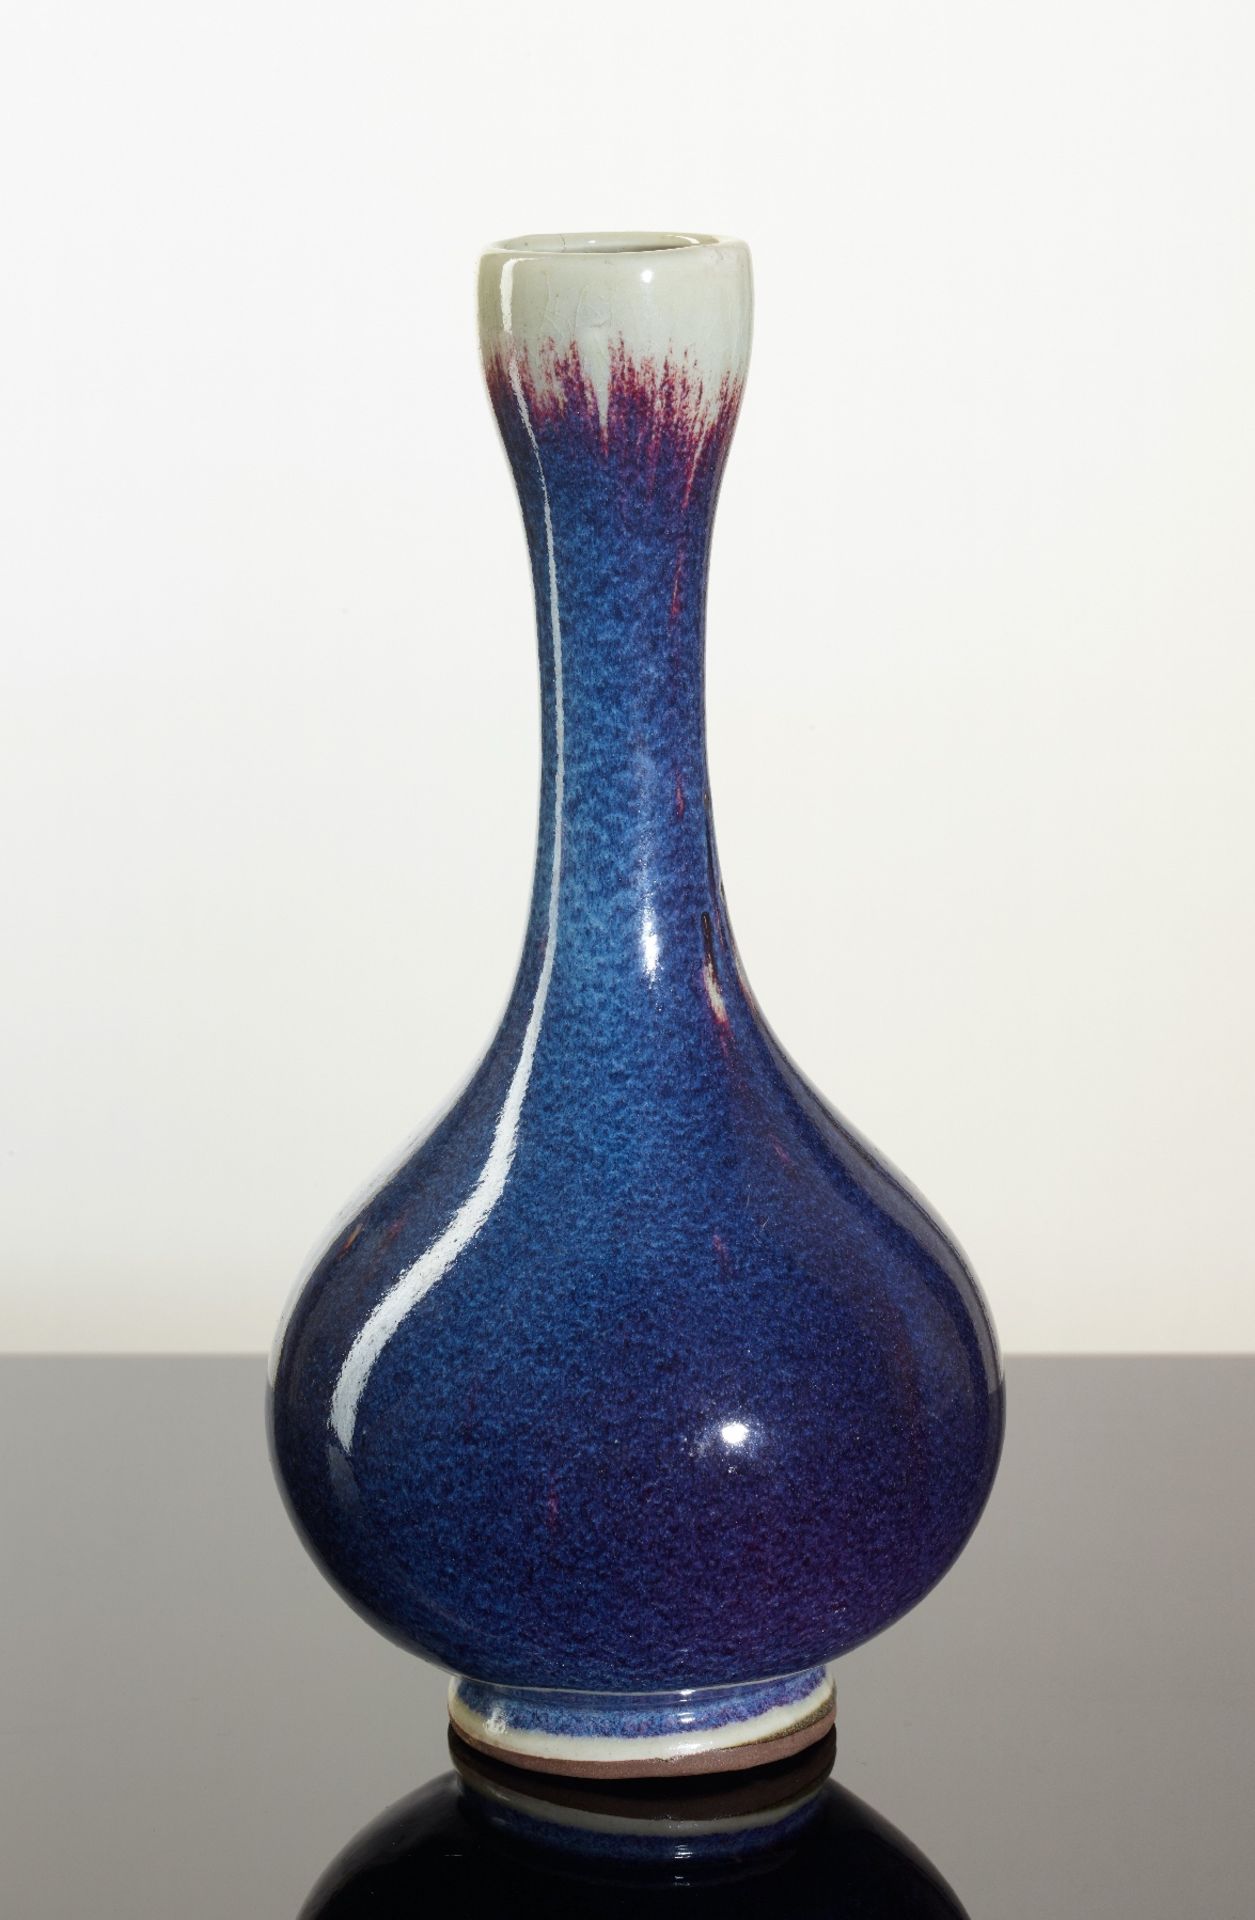 Glasierte Keramik (Steinzeug) China, 20. Jahrhundert | Glazed ceramic (stoneware) China, 20th Centu - Image 3 of 5